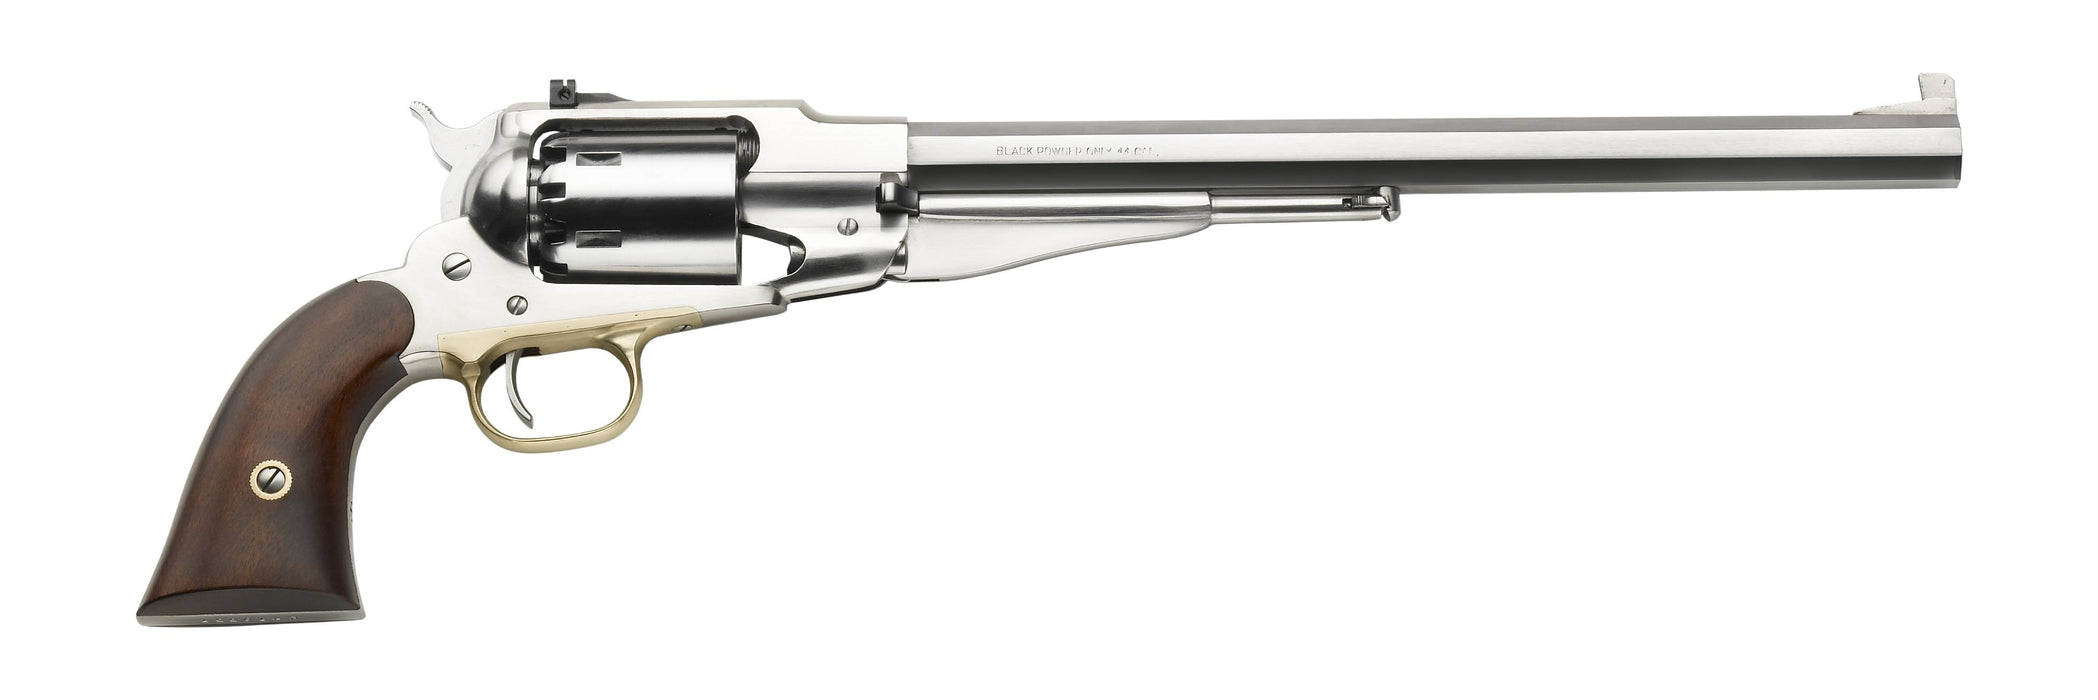 Pietta 1858 Buffalo Stinless Steel Revolver - 44 Caliber - Black Powder Pistol